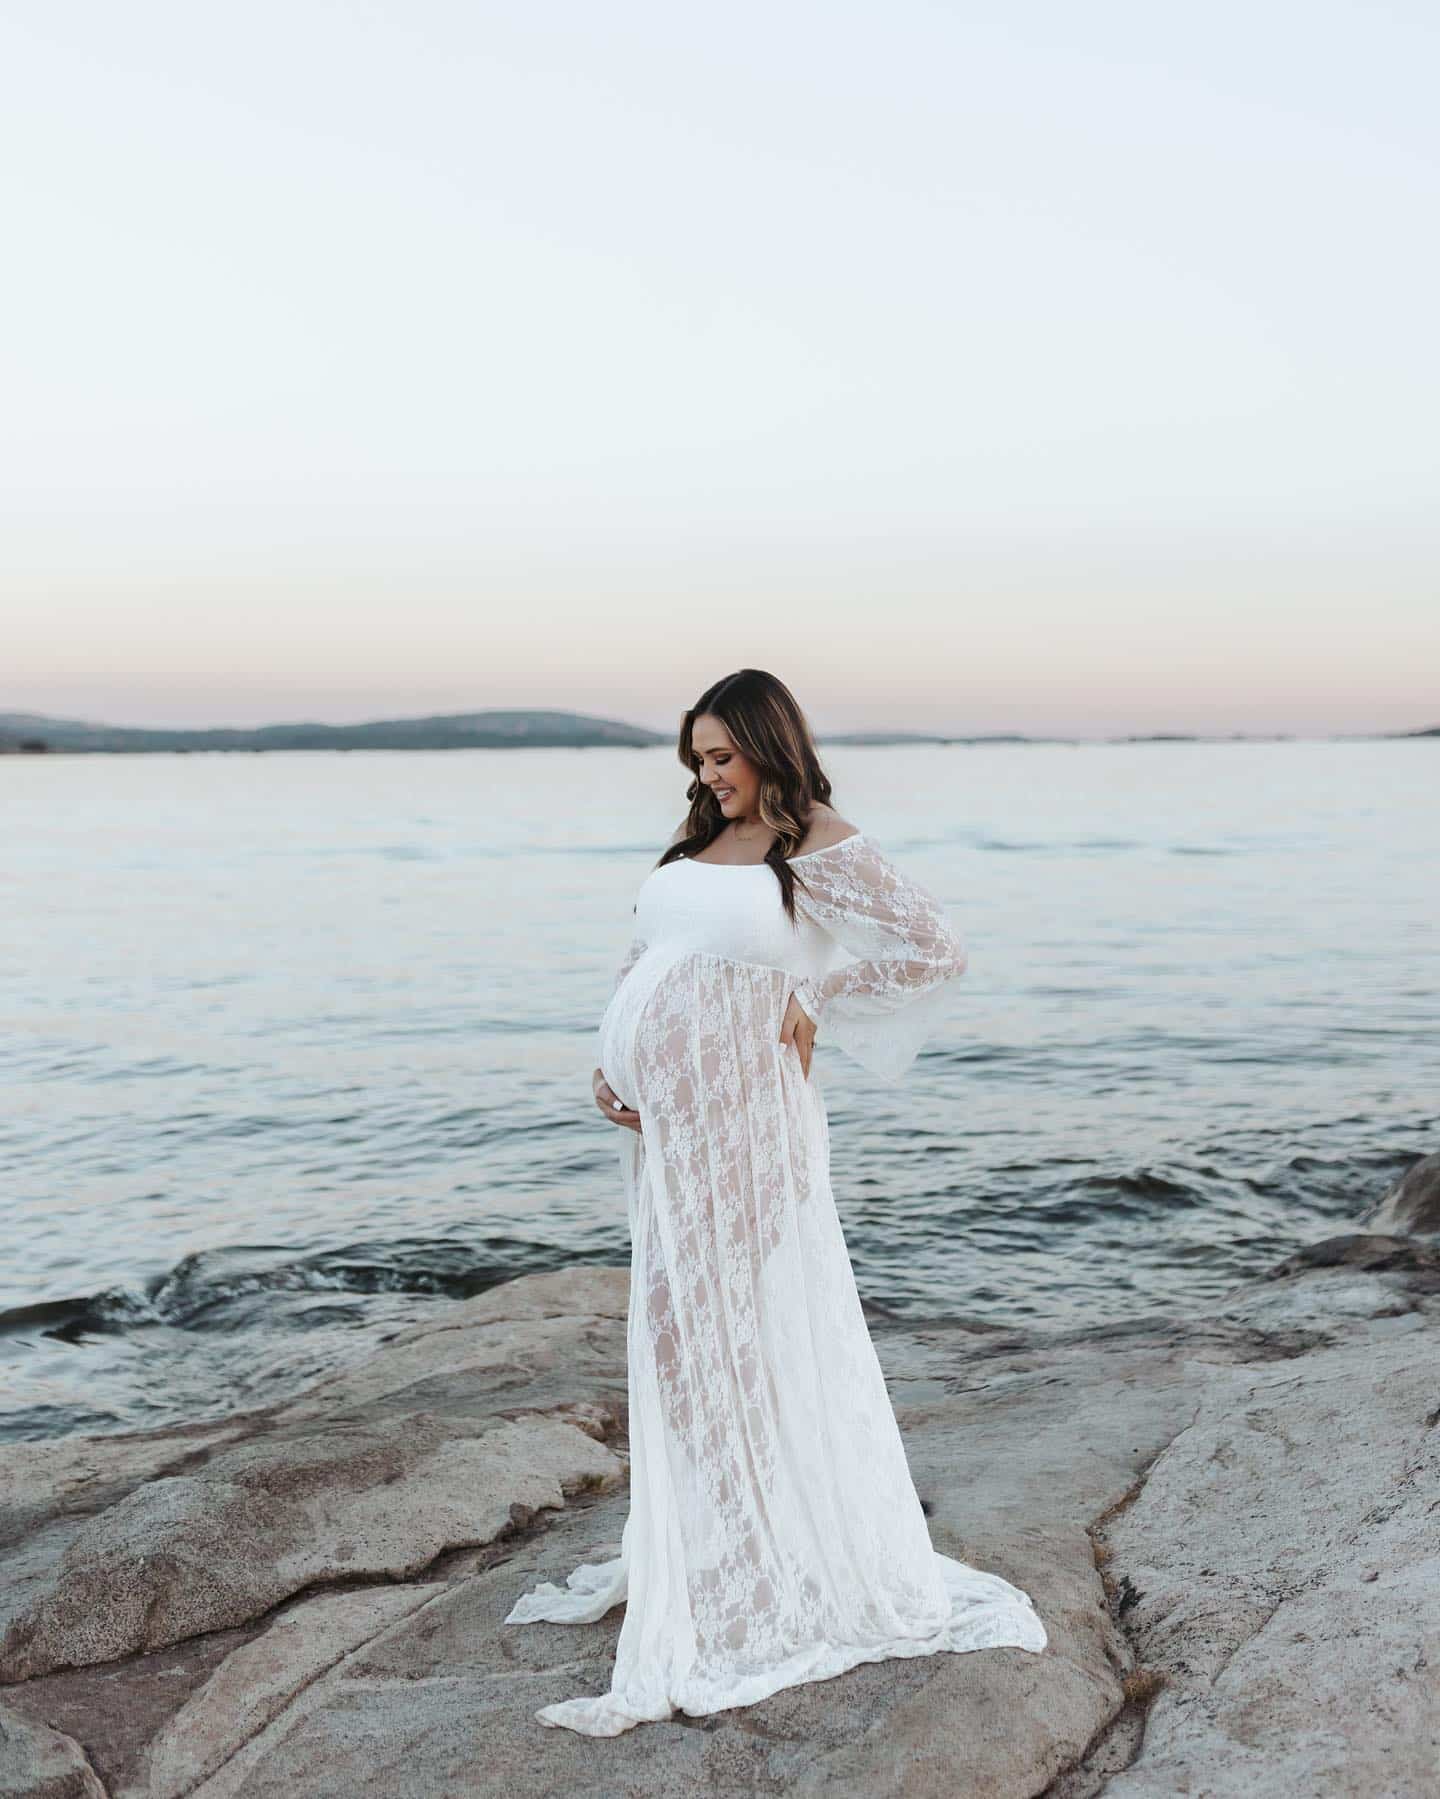 Beach Maternity Photoshoot with Boho Dress